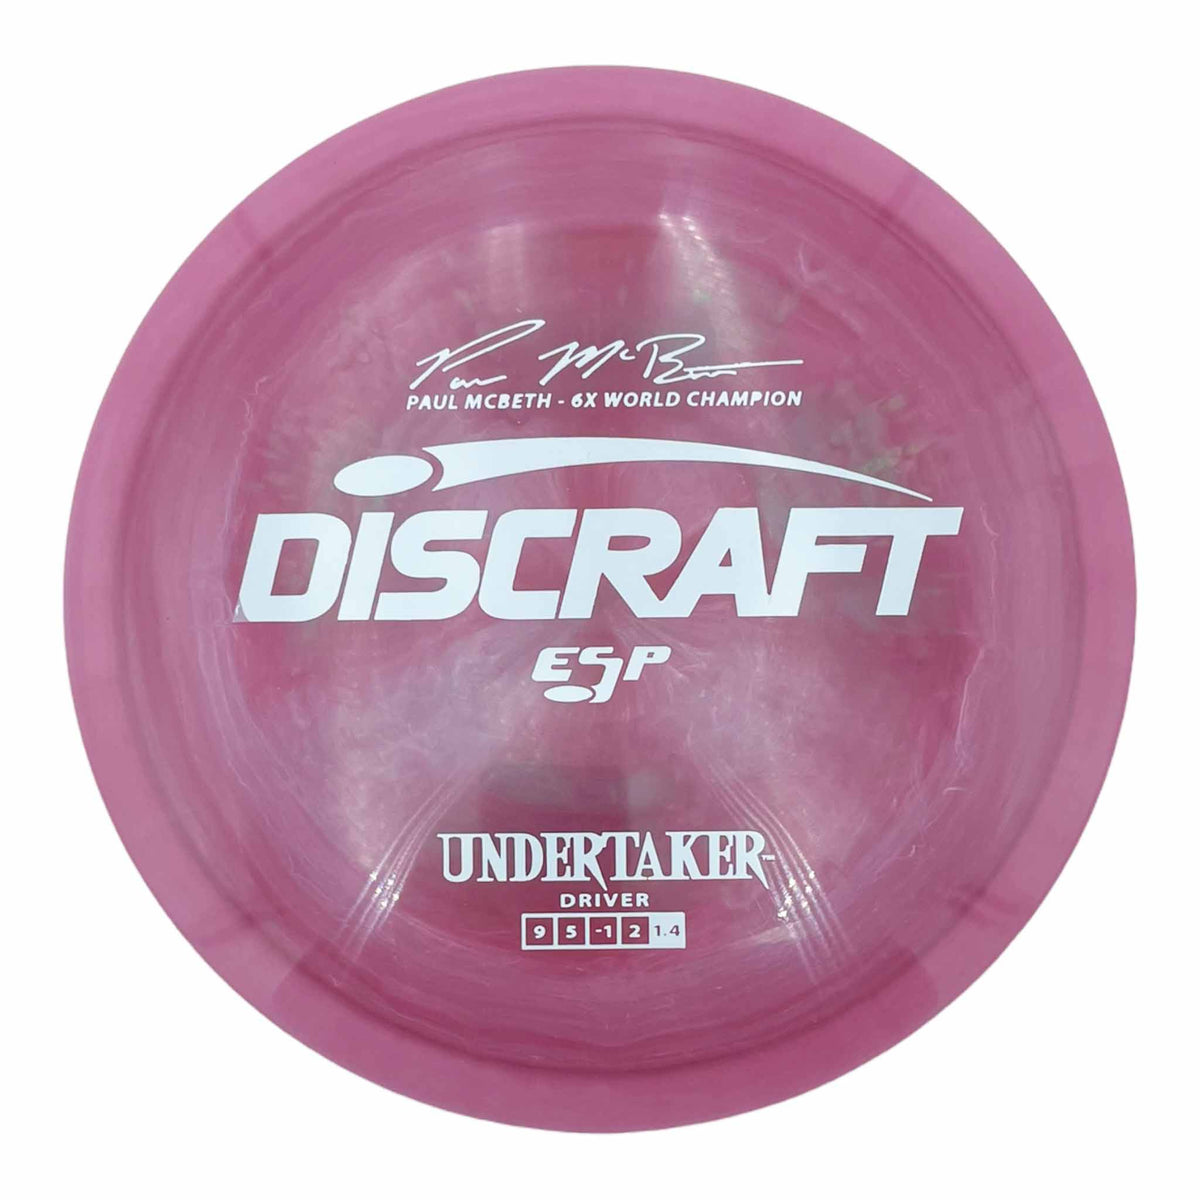 Discraft ESP Undertaker distance driver - Red / White